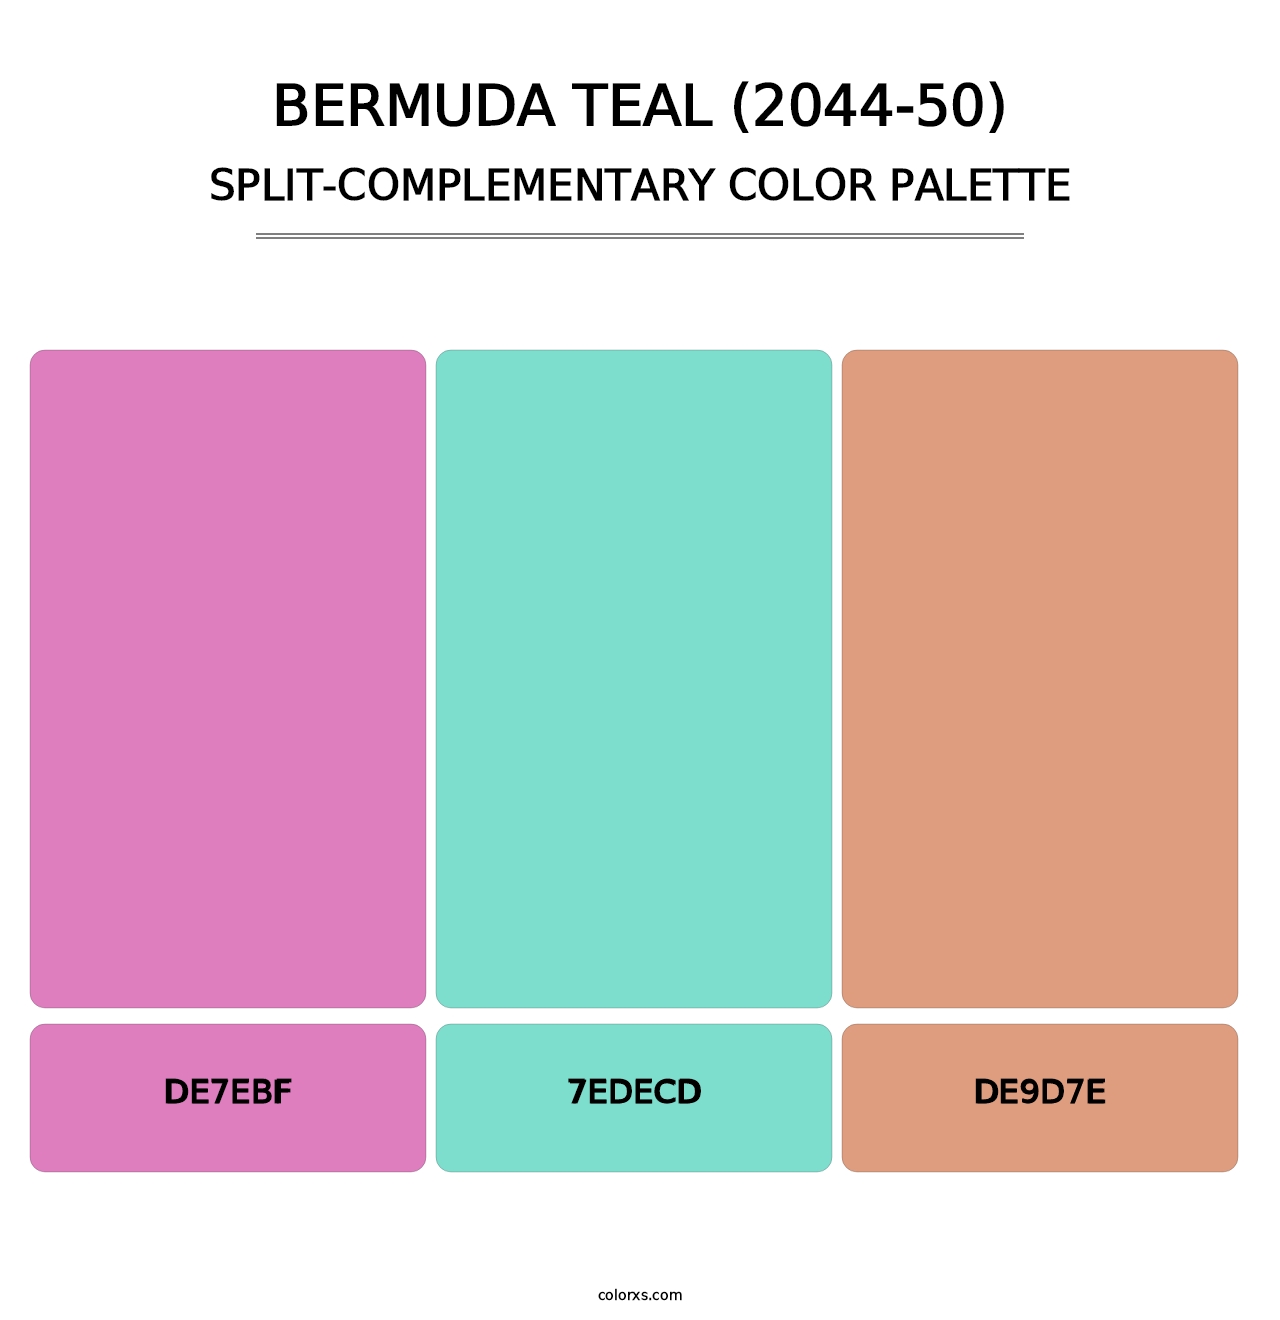 Bermuda Teal (2044-50) - Split-Complementary Color Palette